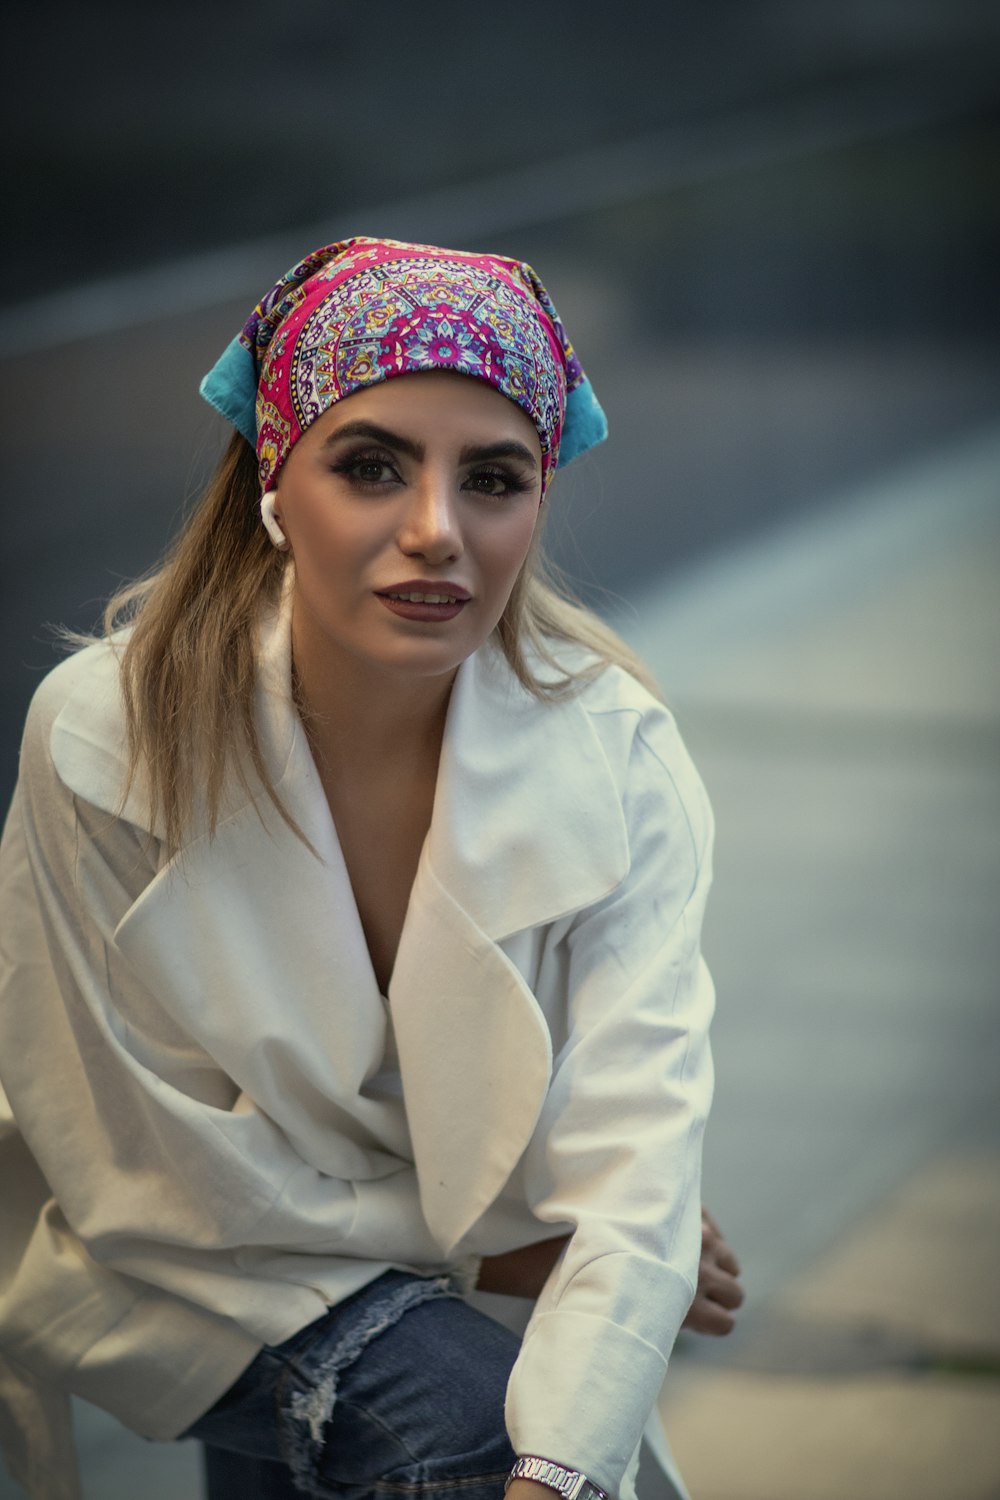 a woman sitting on a bench wearing a headband